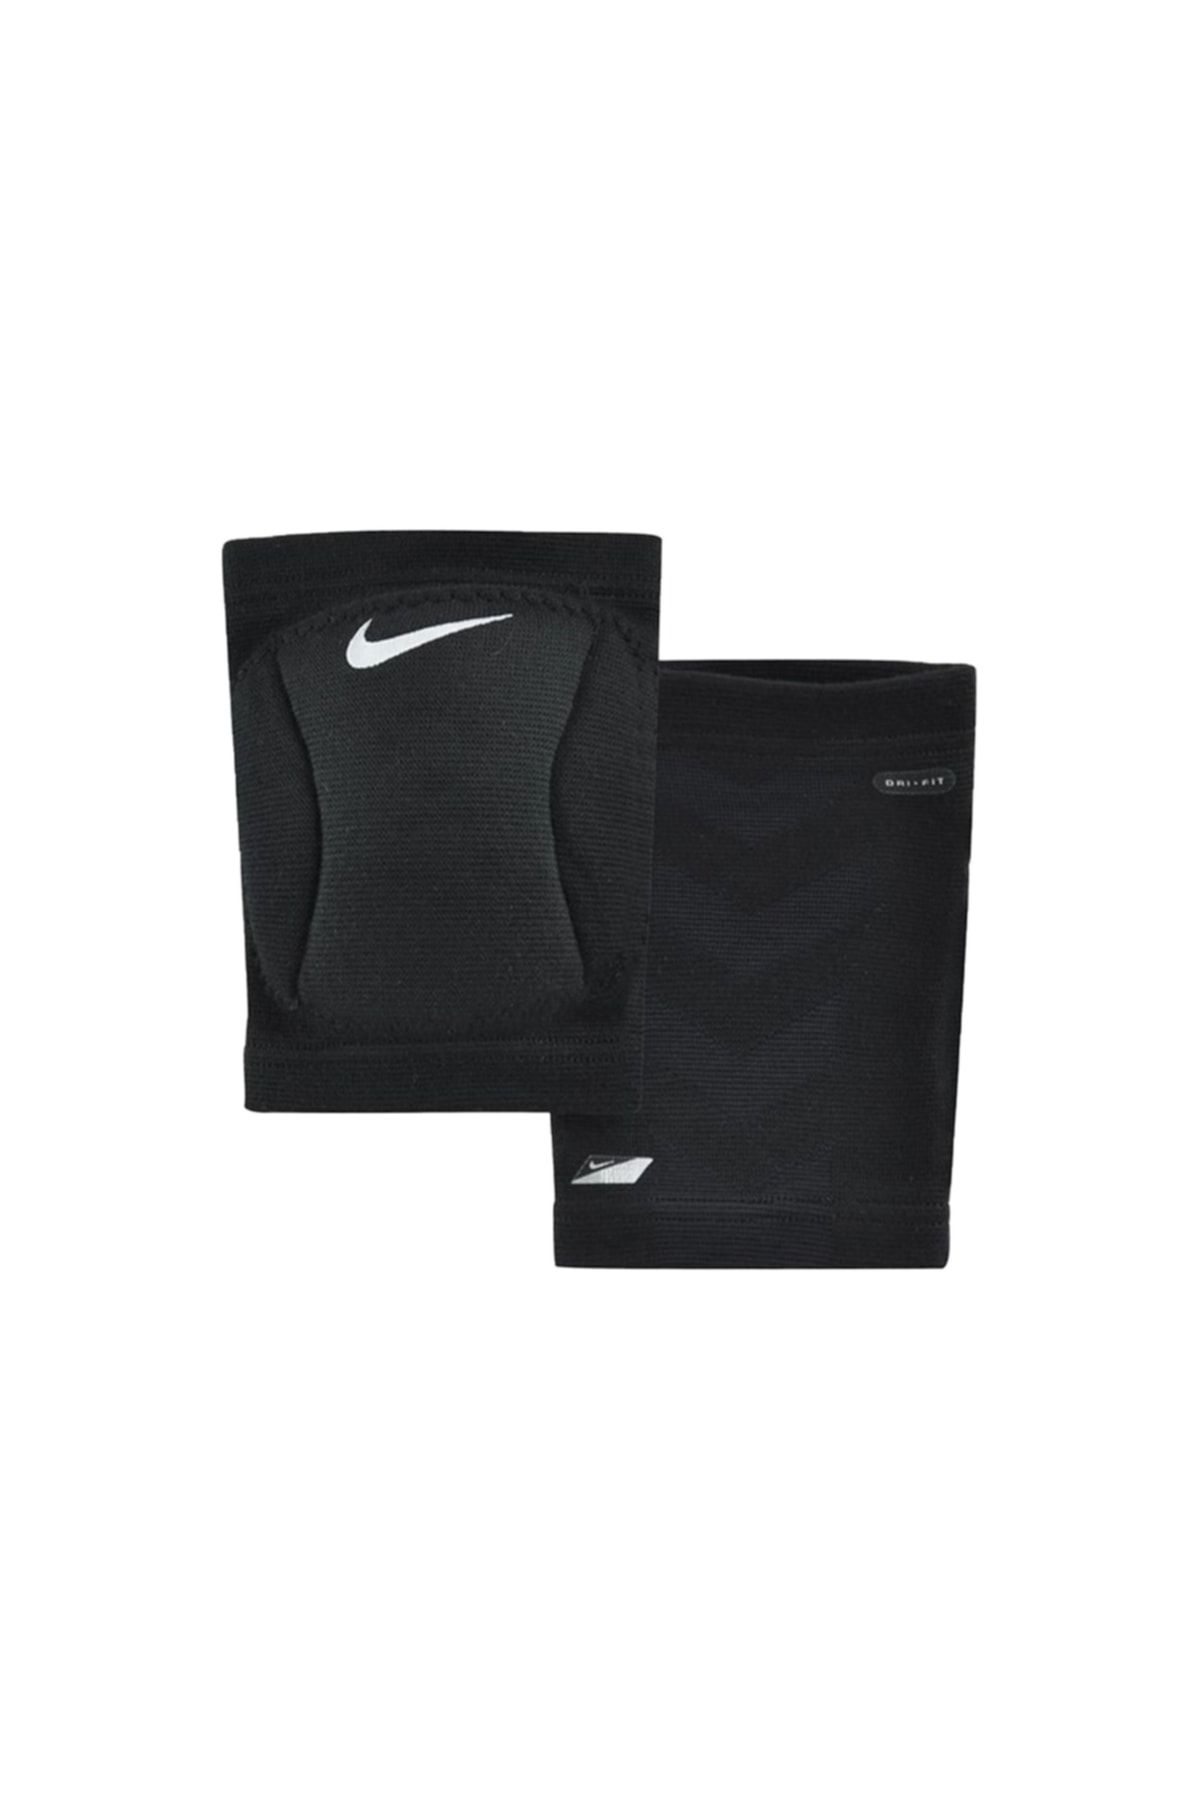 Nike Streak Volleyball Knee Pad Ce Black